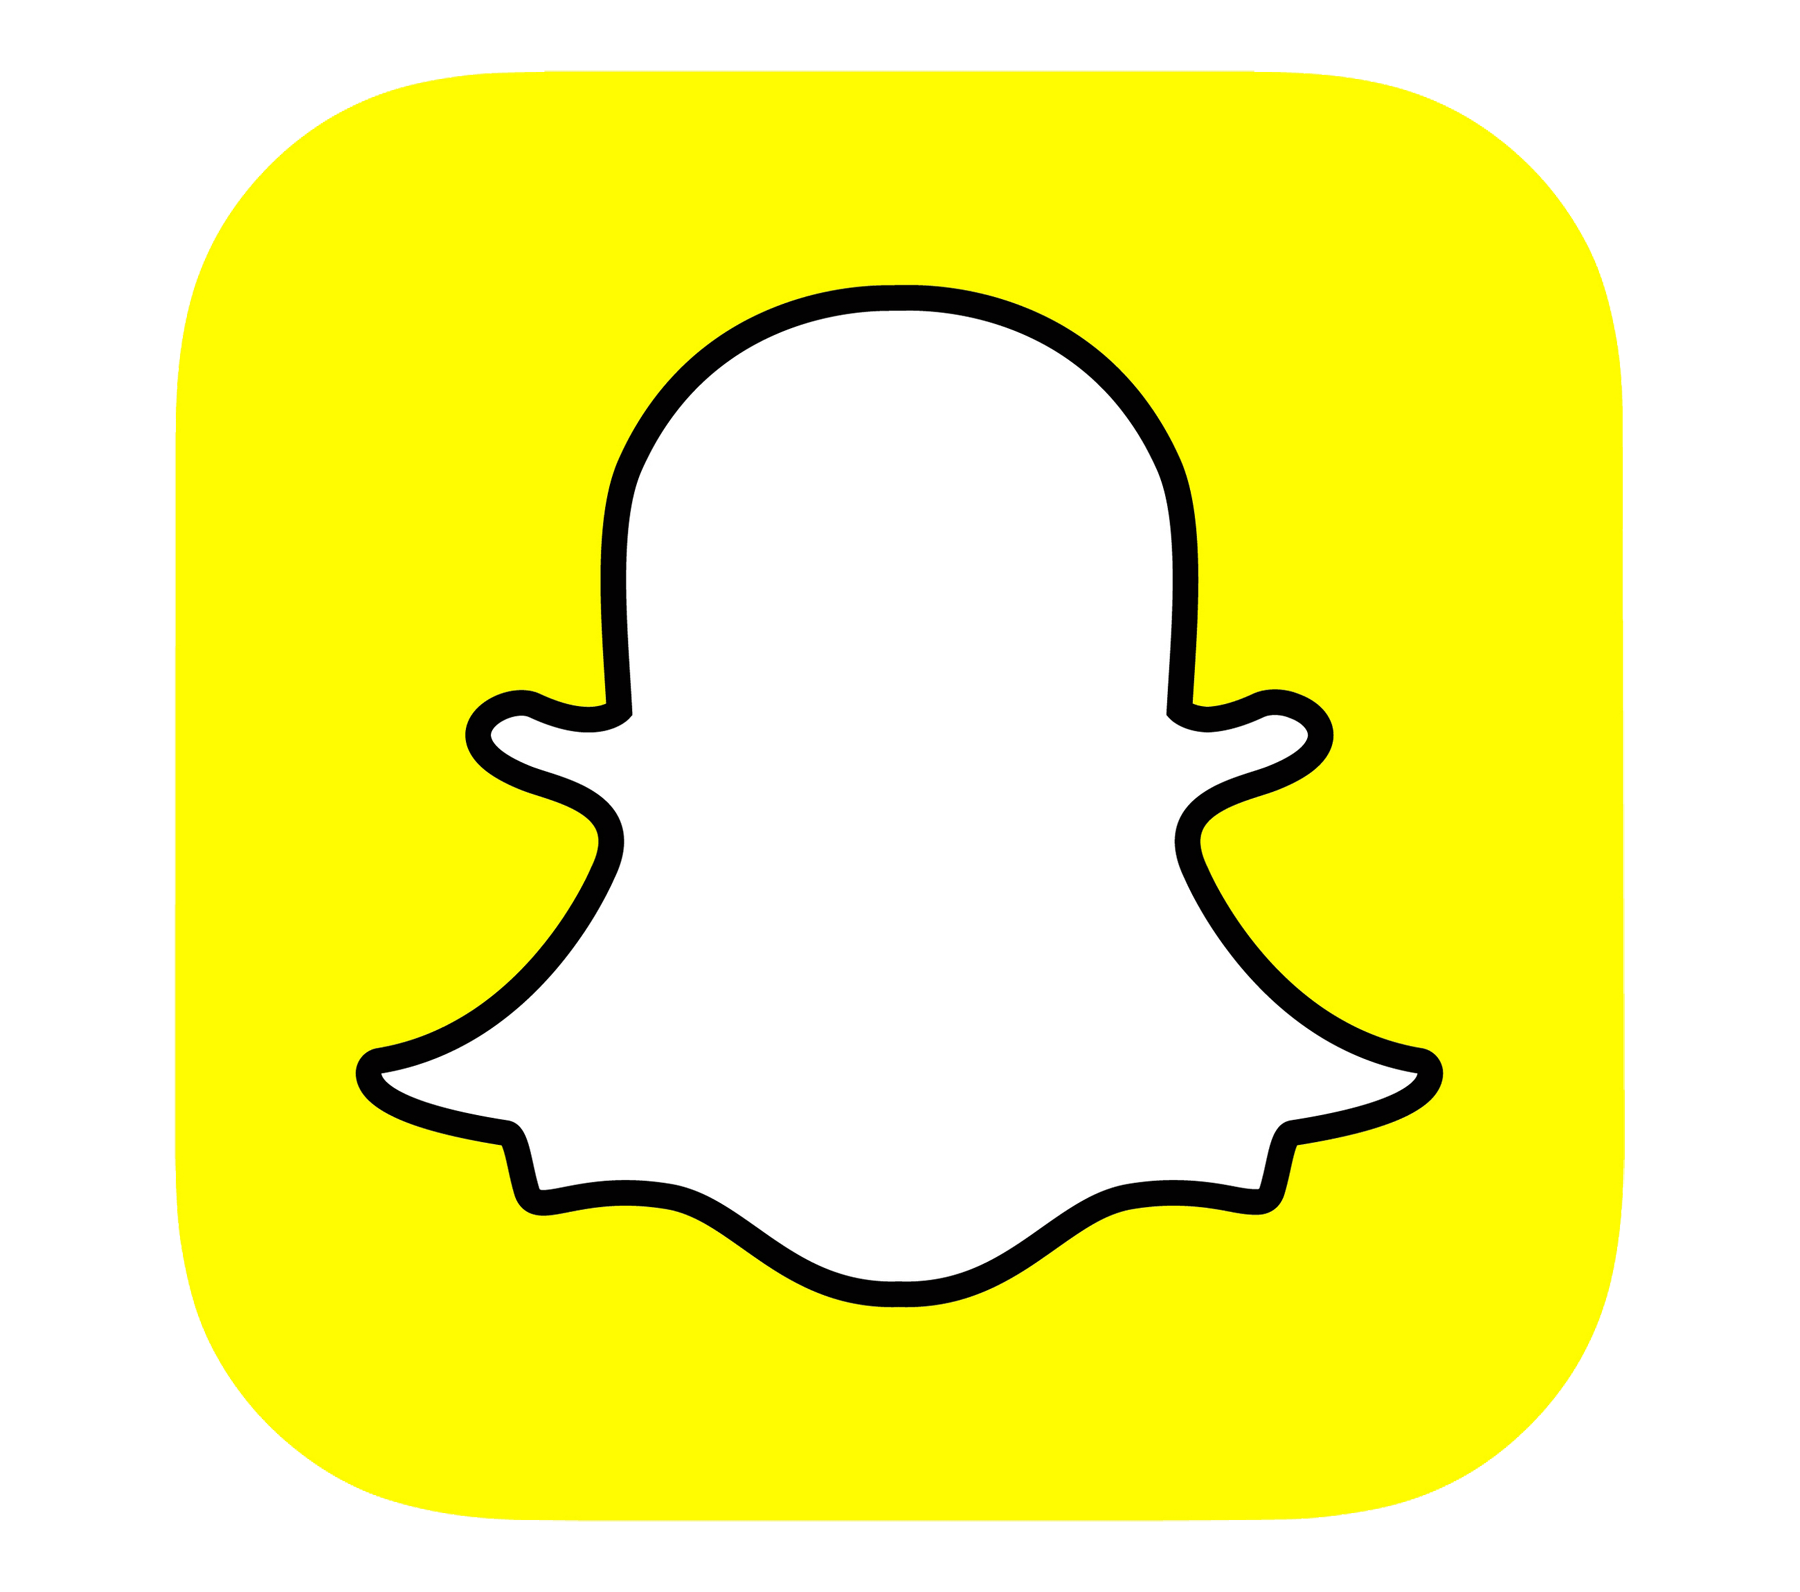 Snapchatt Logo - Meaning Snapchat logo and symbol | history and evolution